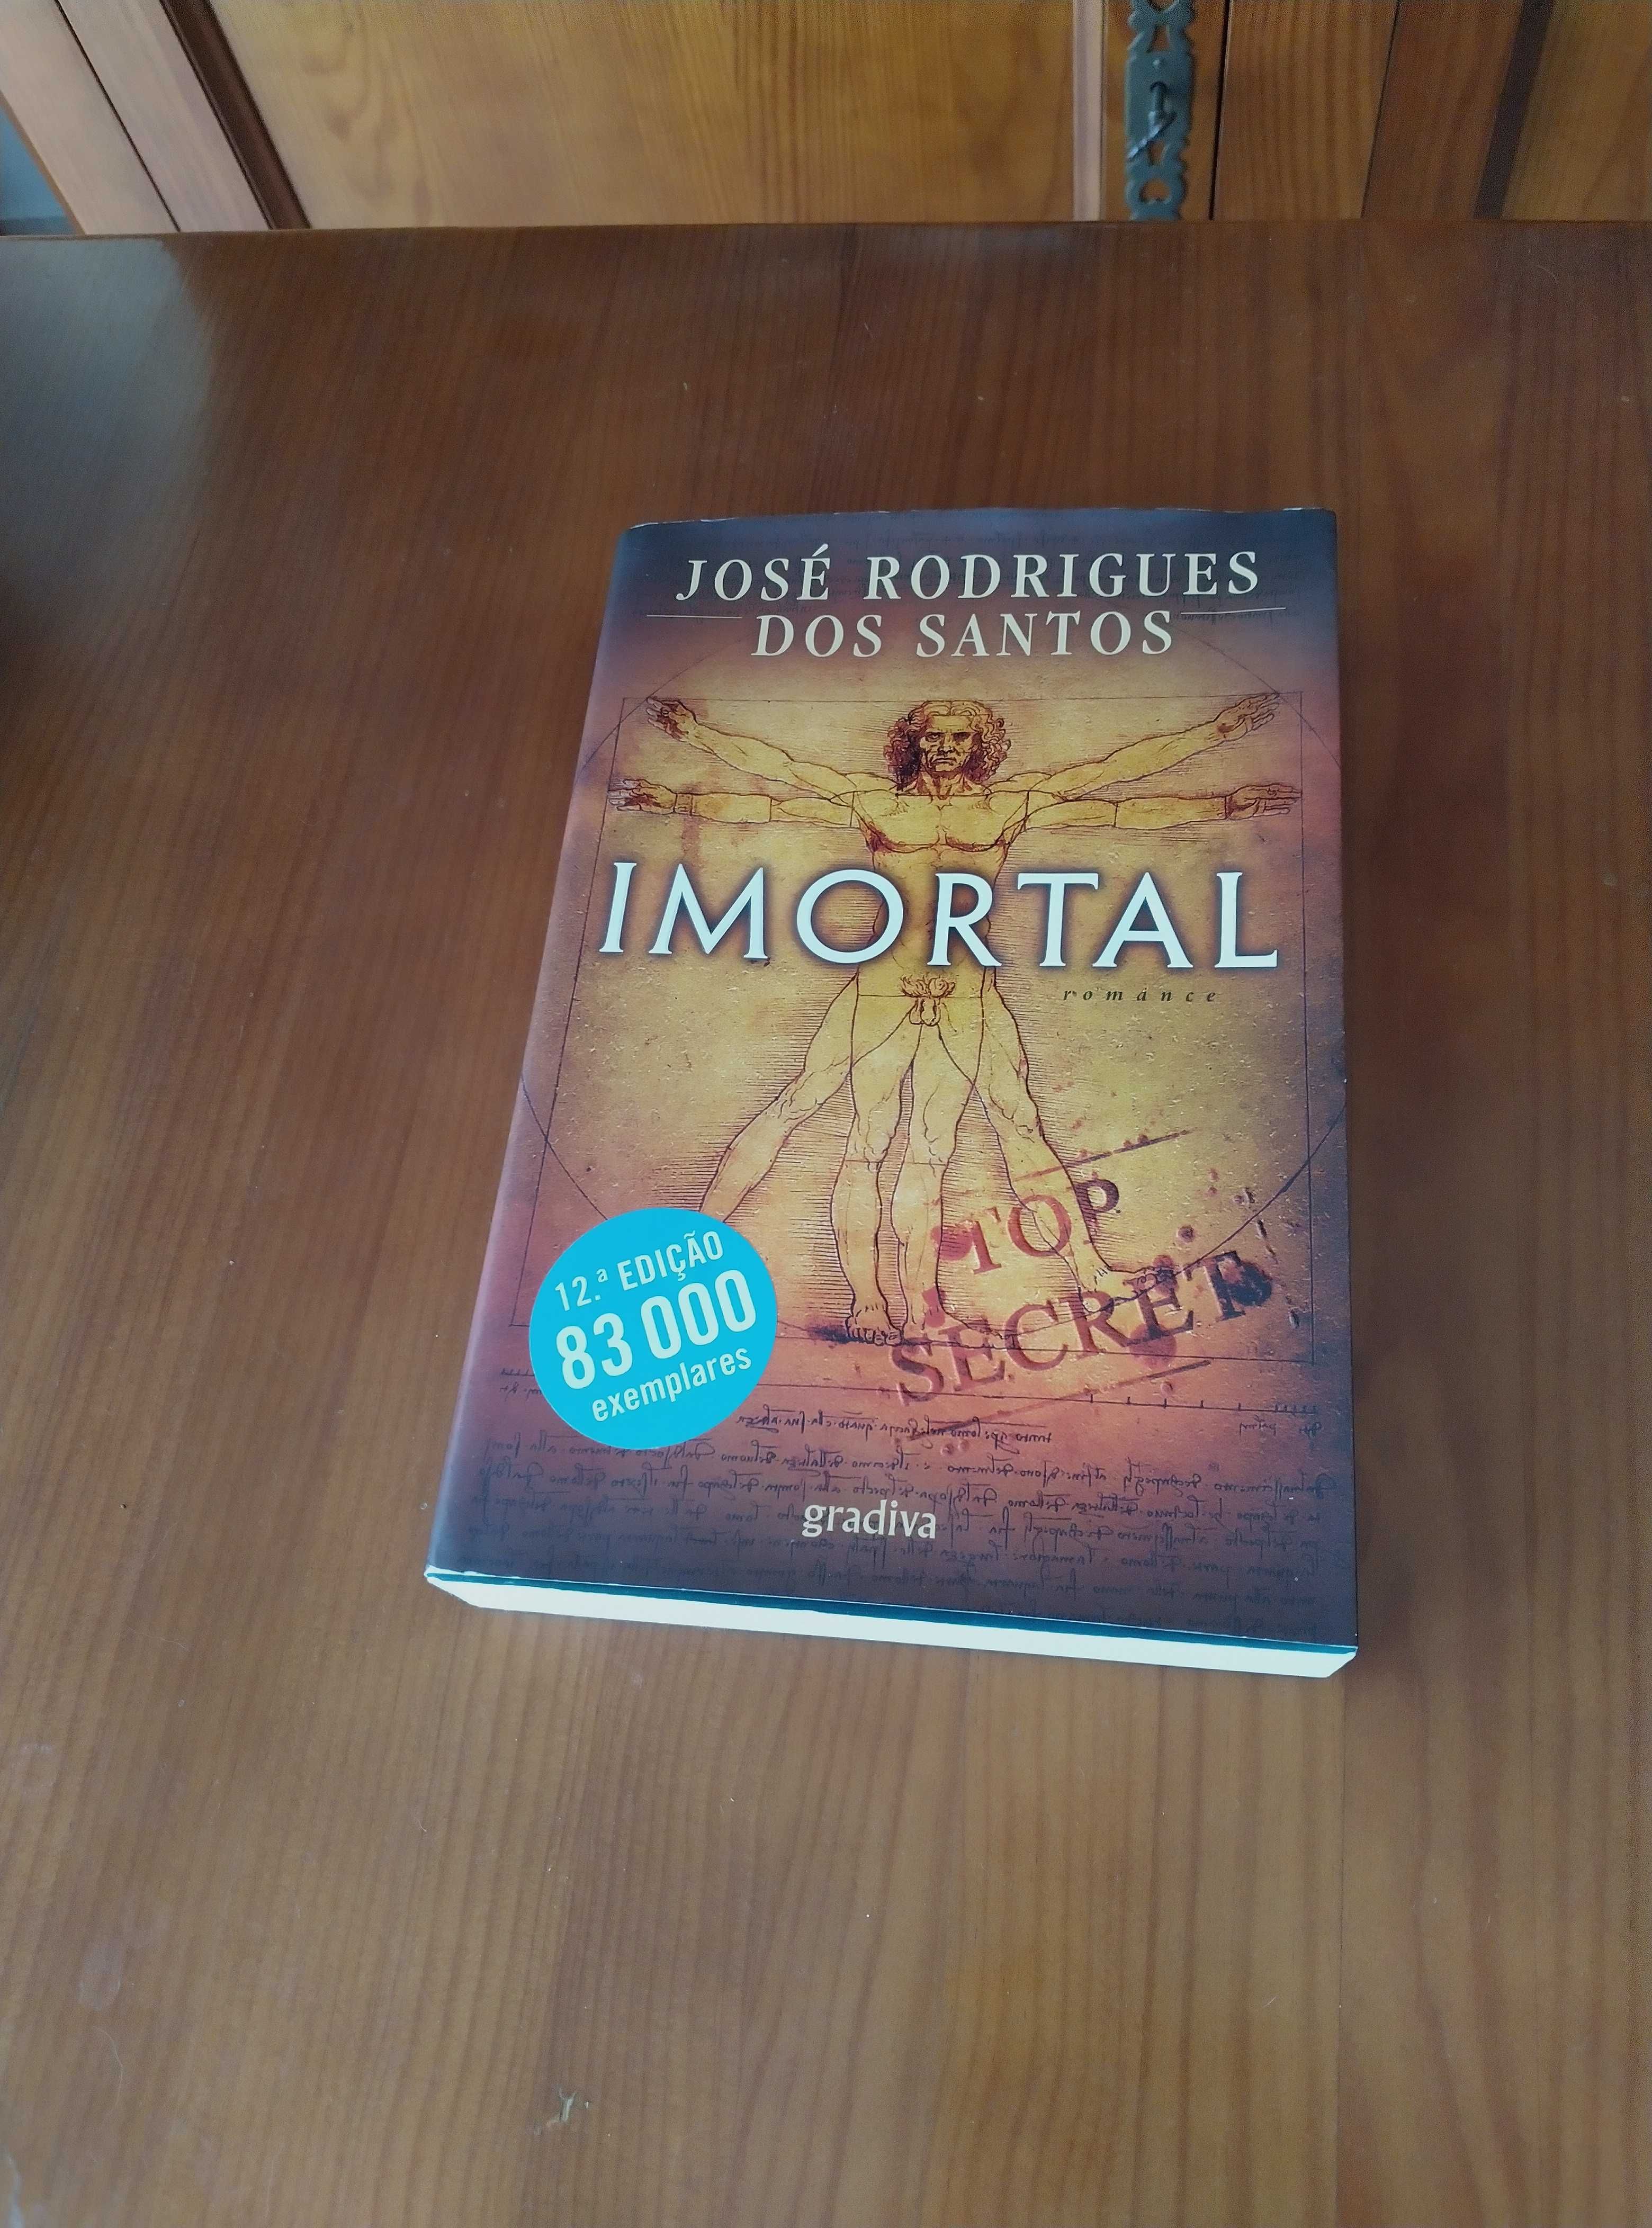 Livro "Imortal" do José Rodrigues dos Santos